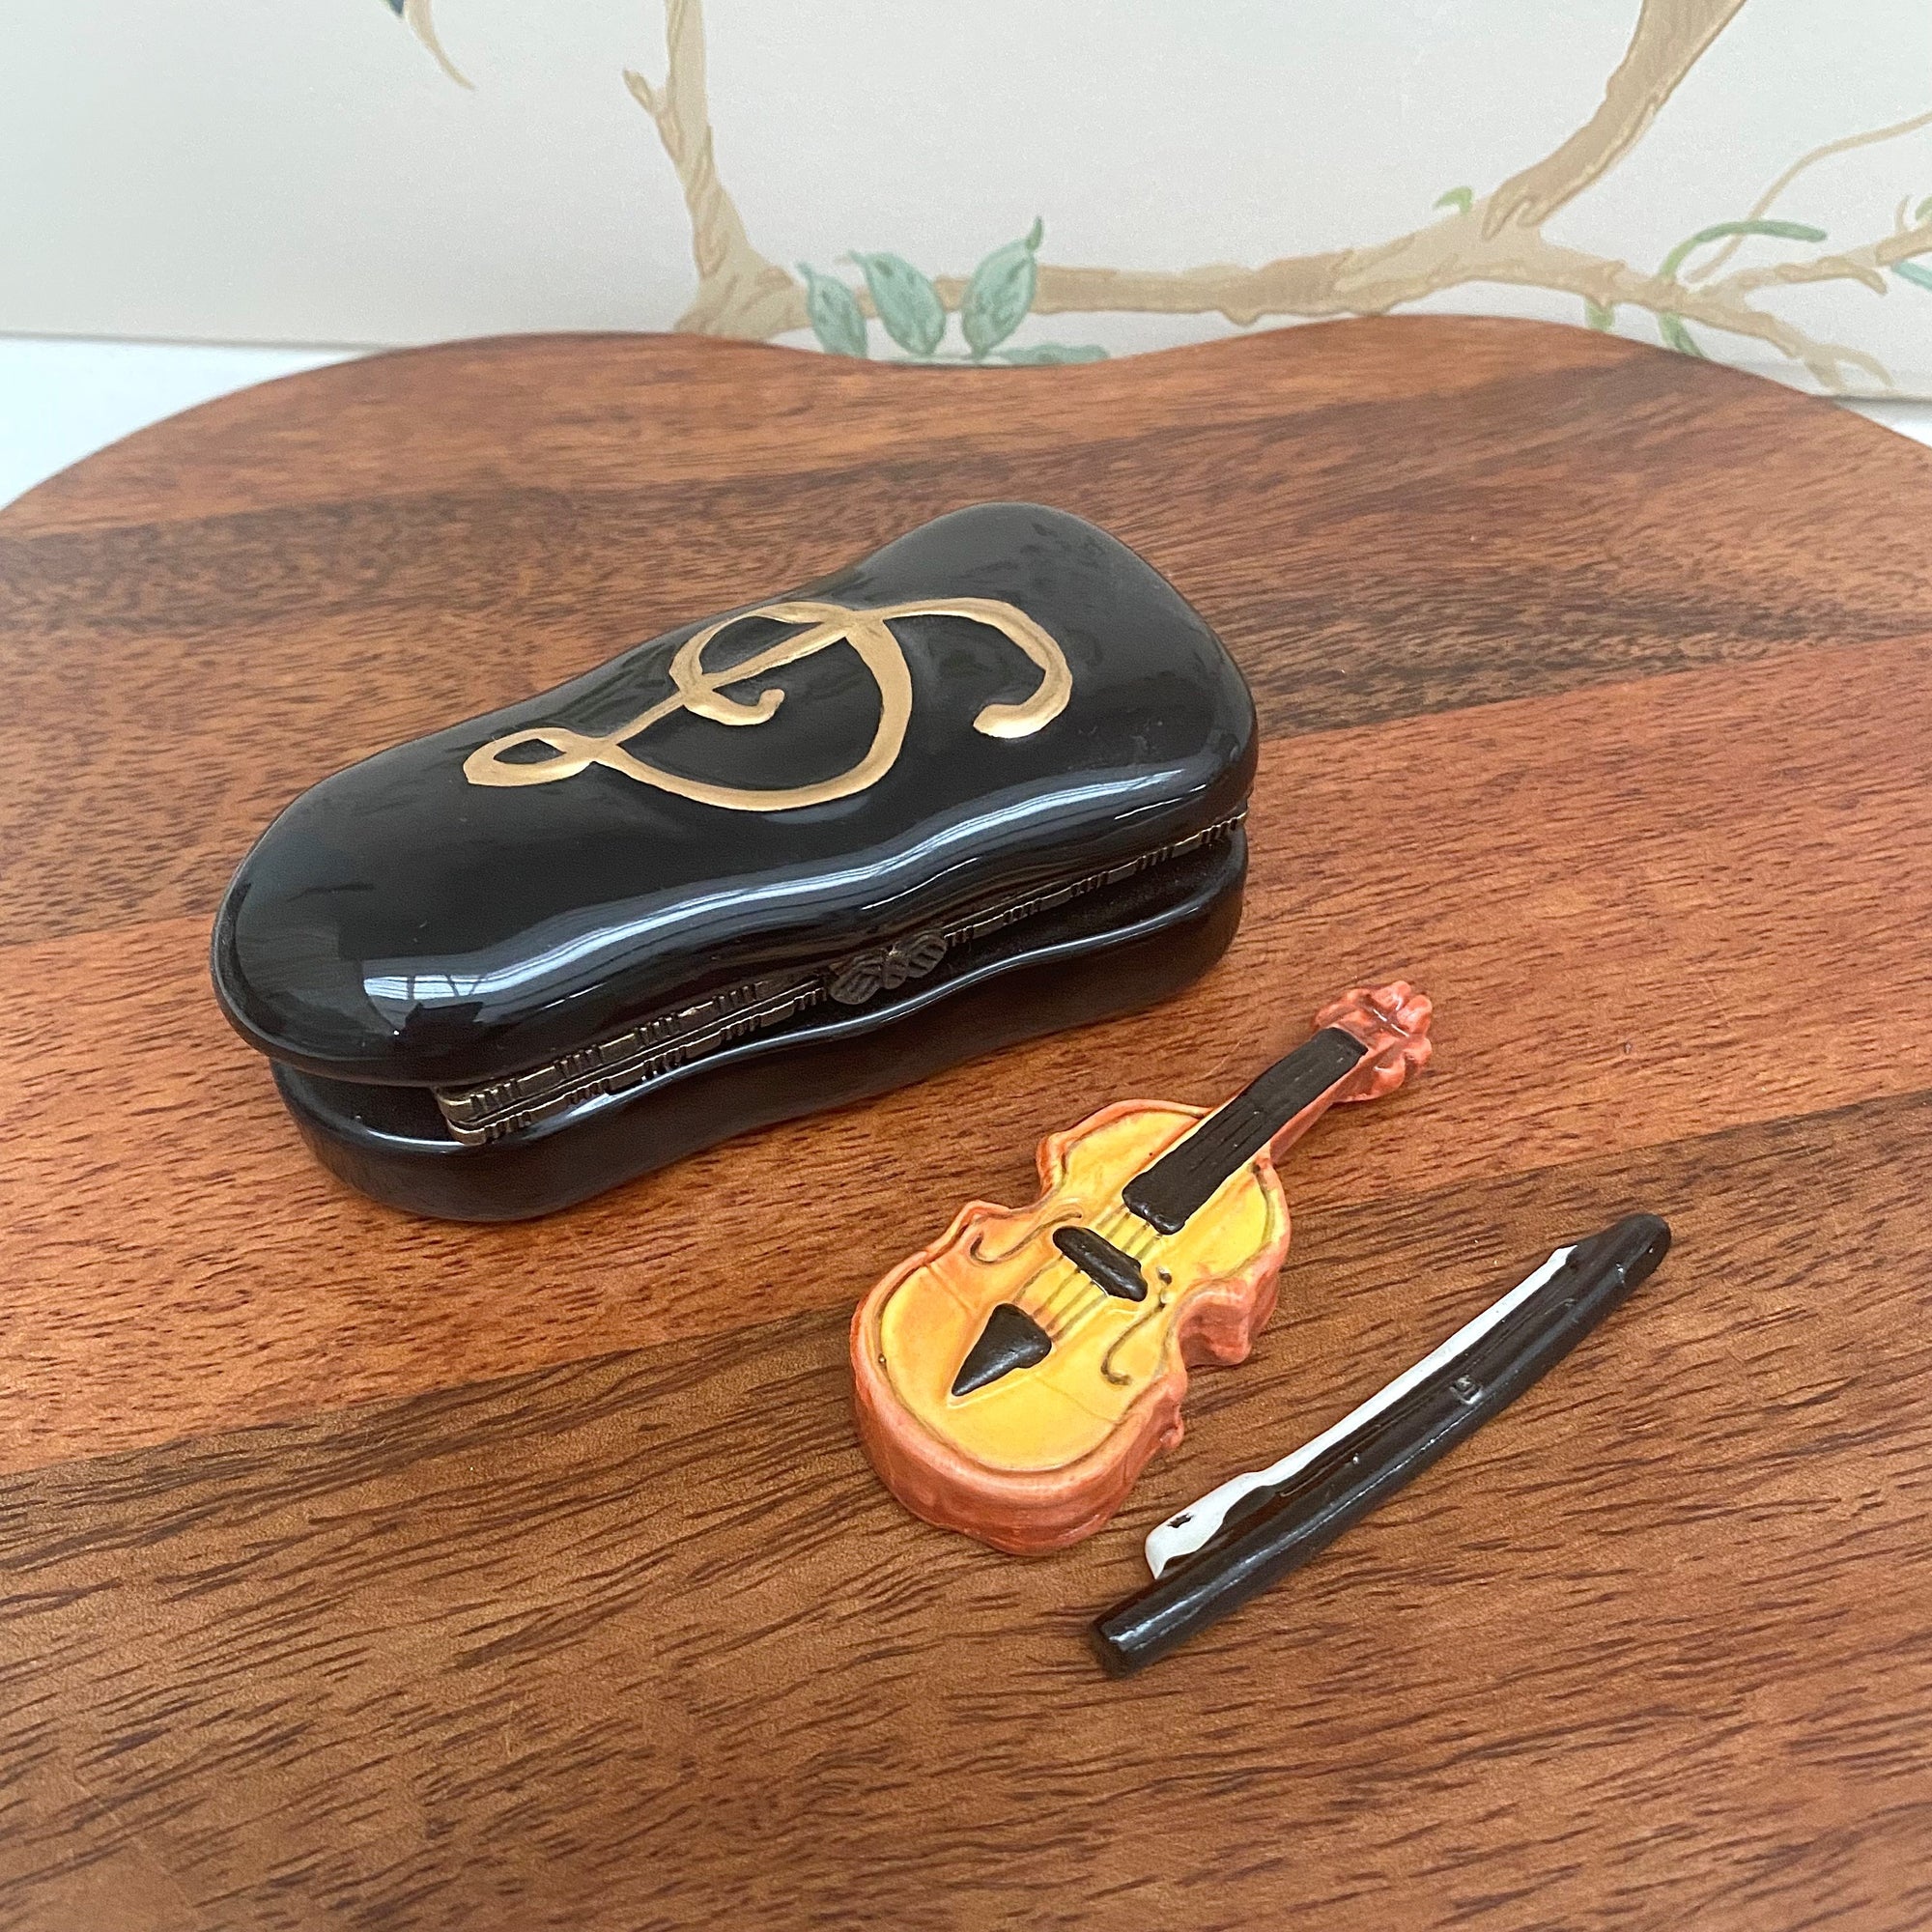 Violin case ceramic box with hidden violin and bow trinket inside.